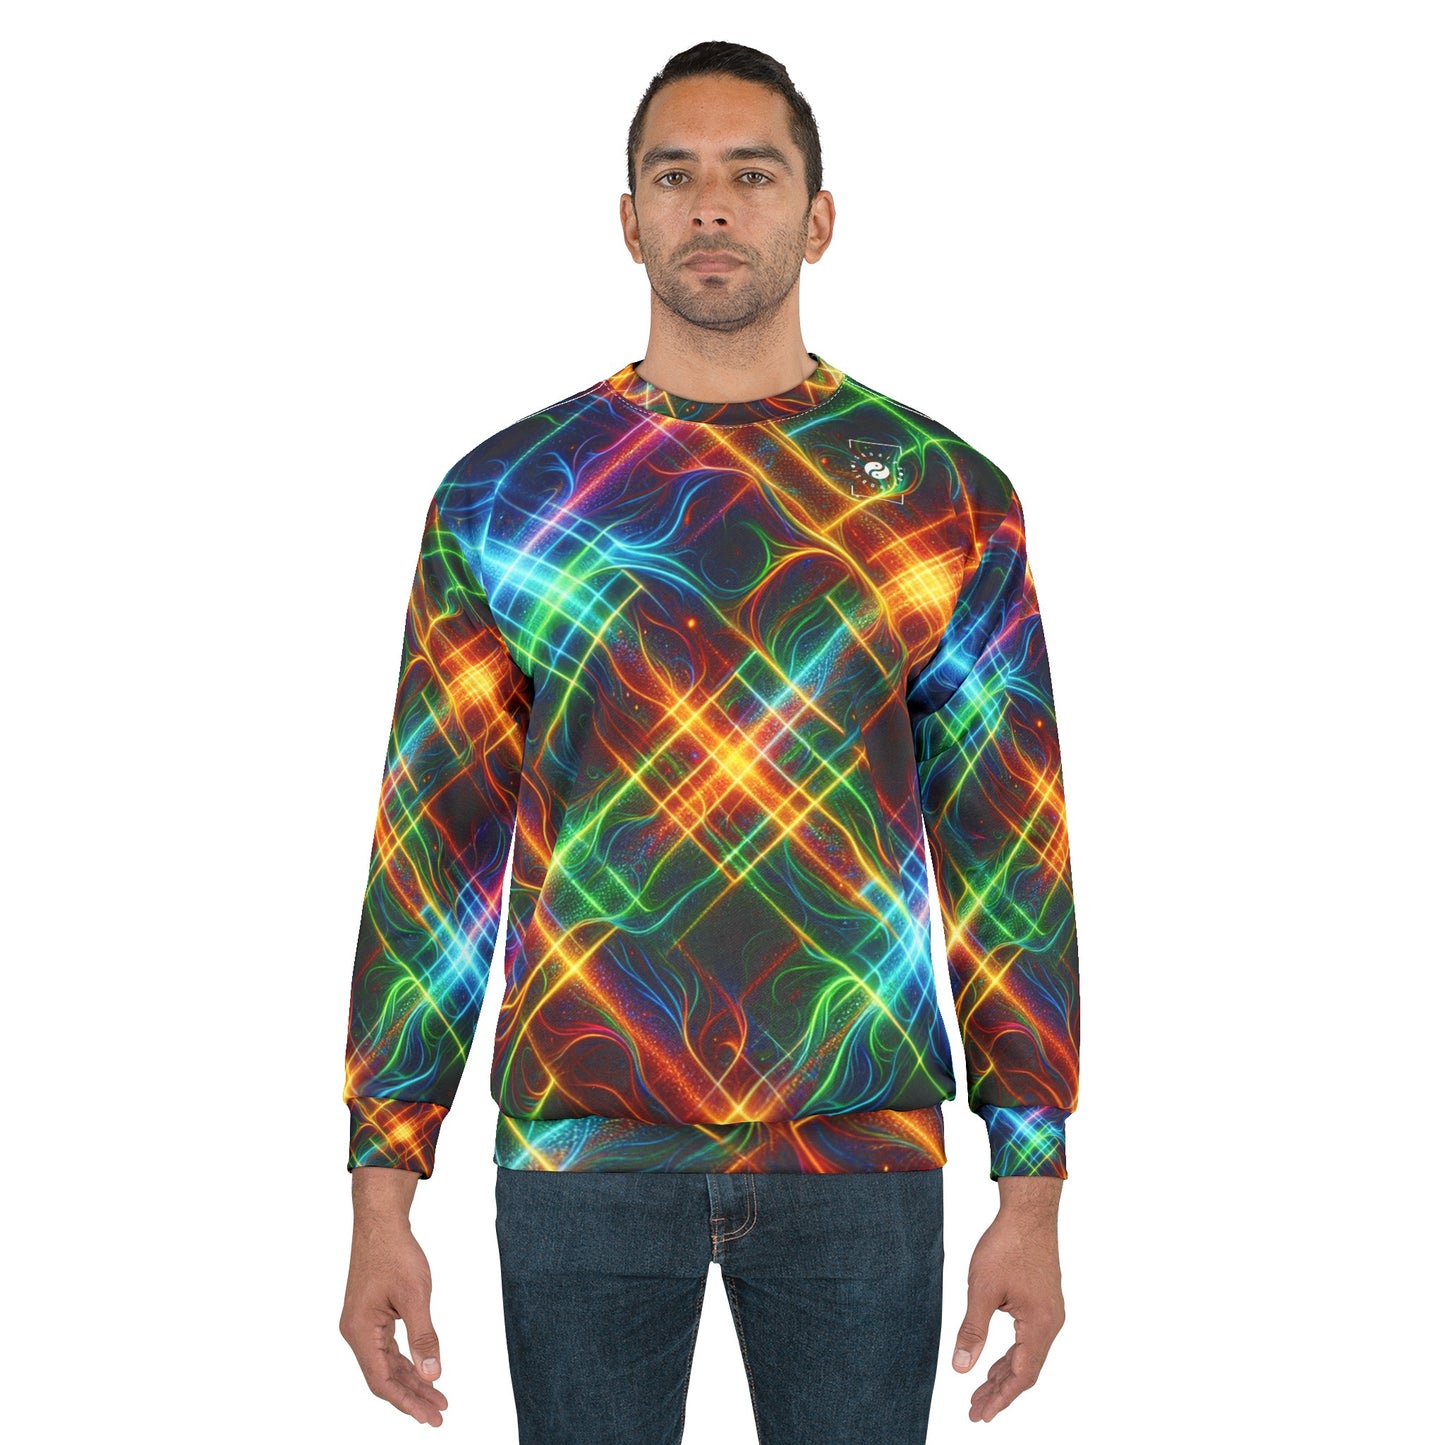 "Neon Plaid Luminosity Matrix" - Unisex Sweatshirt